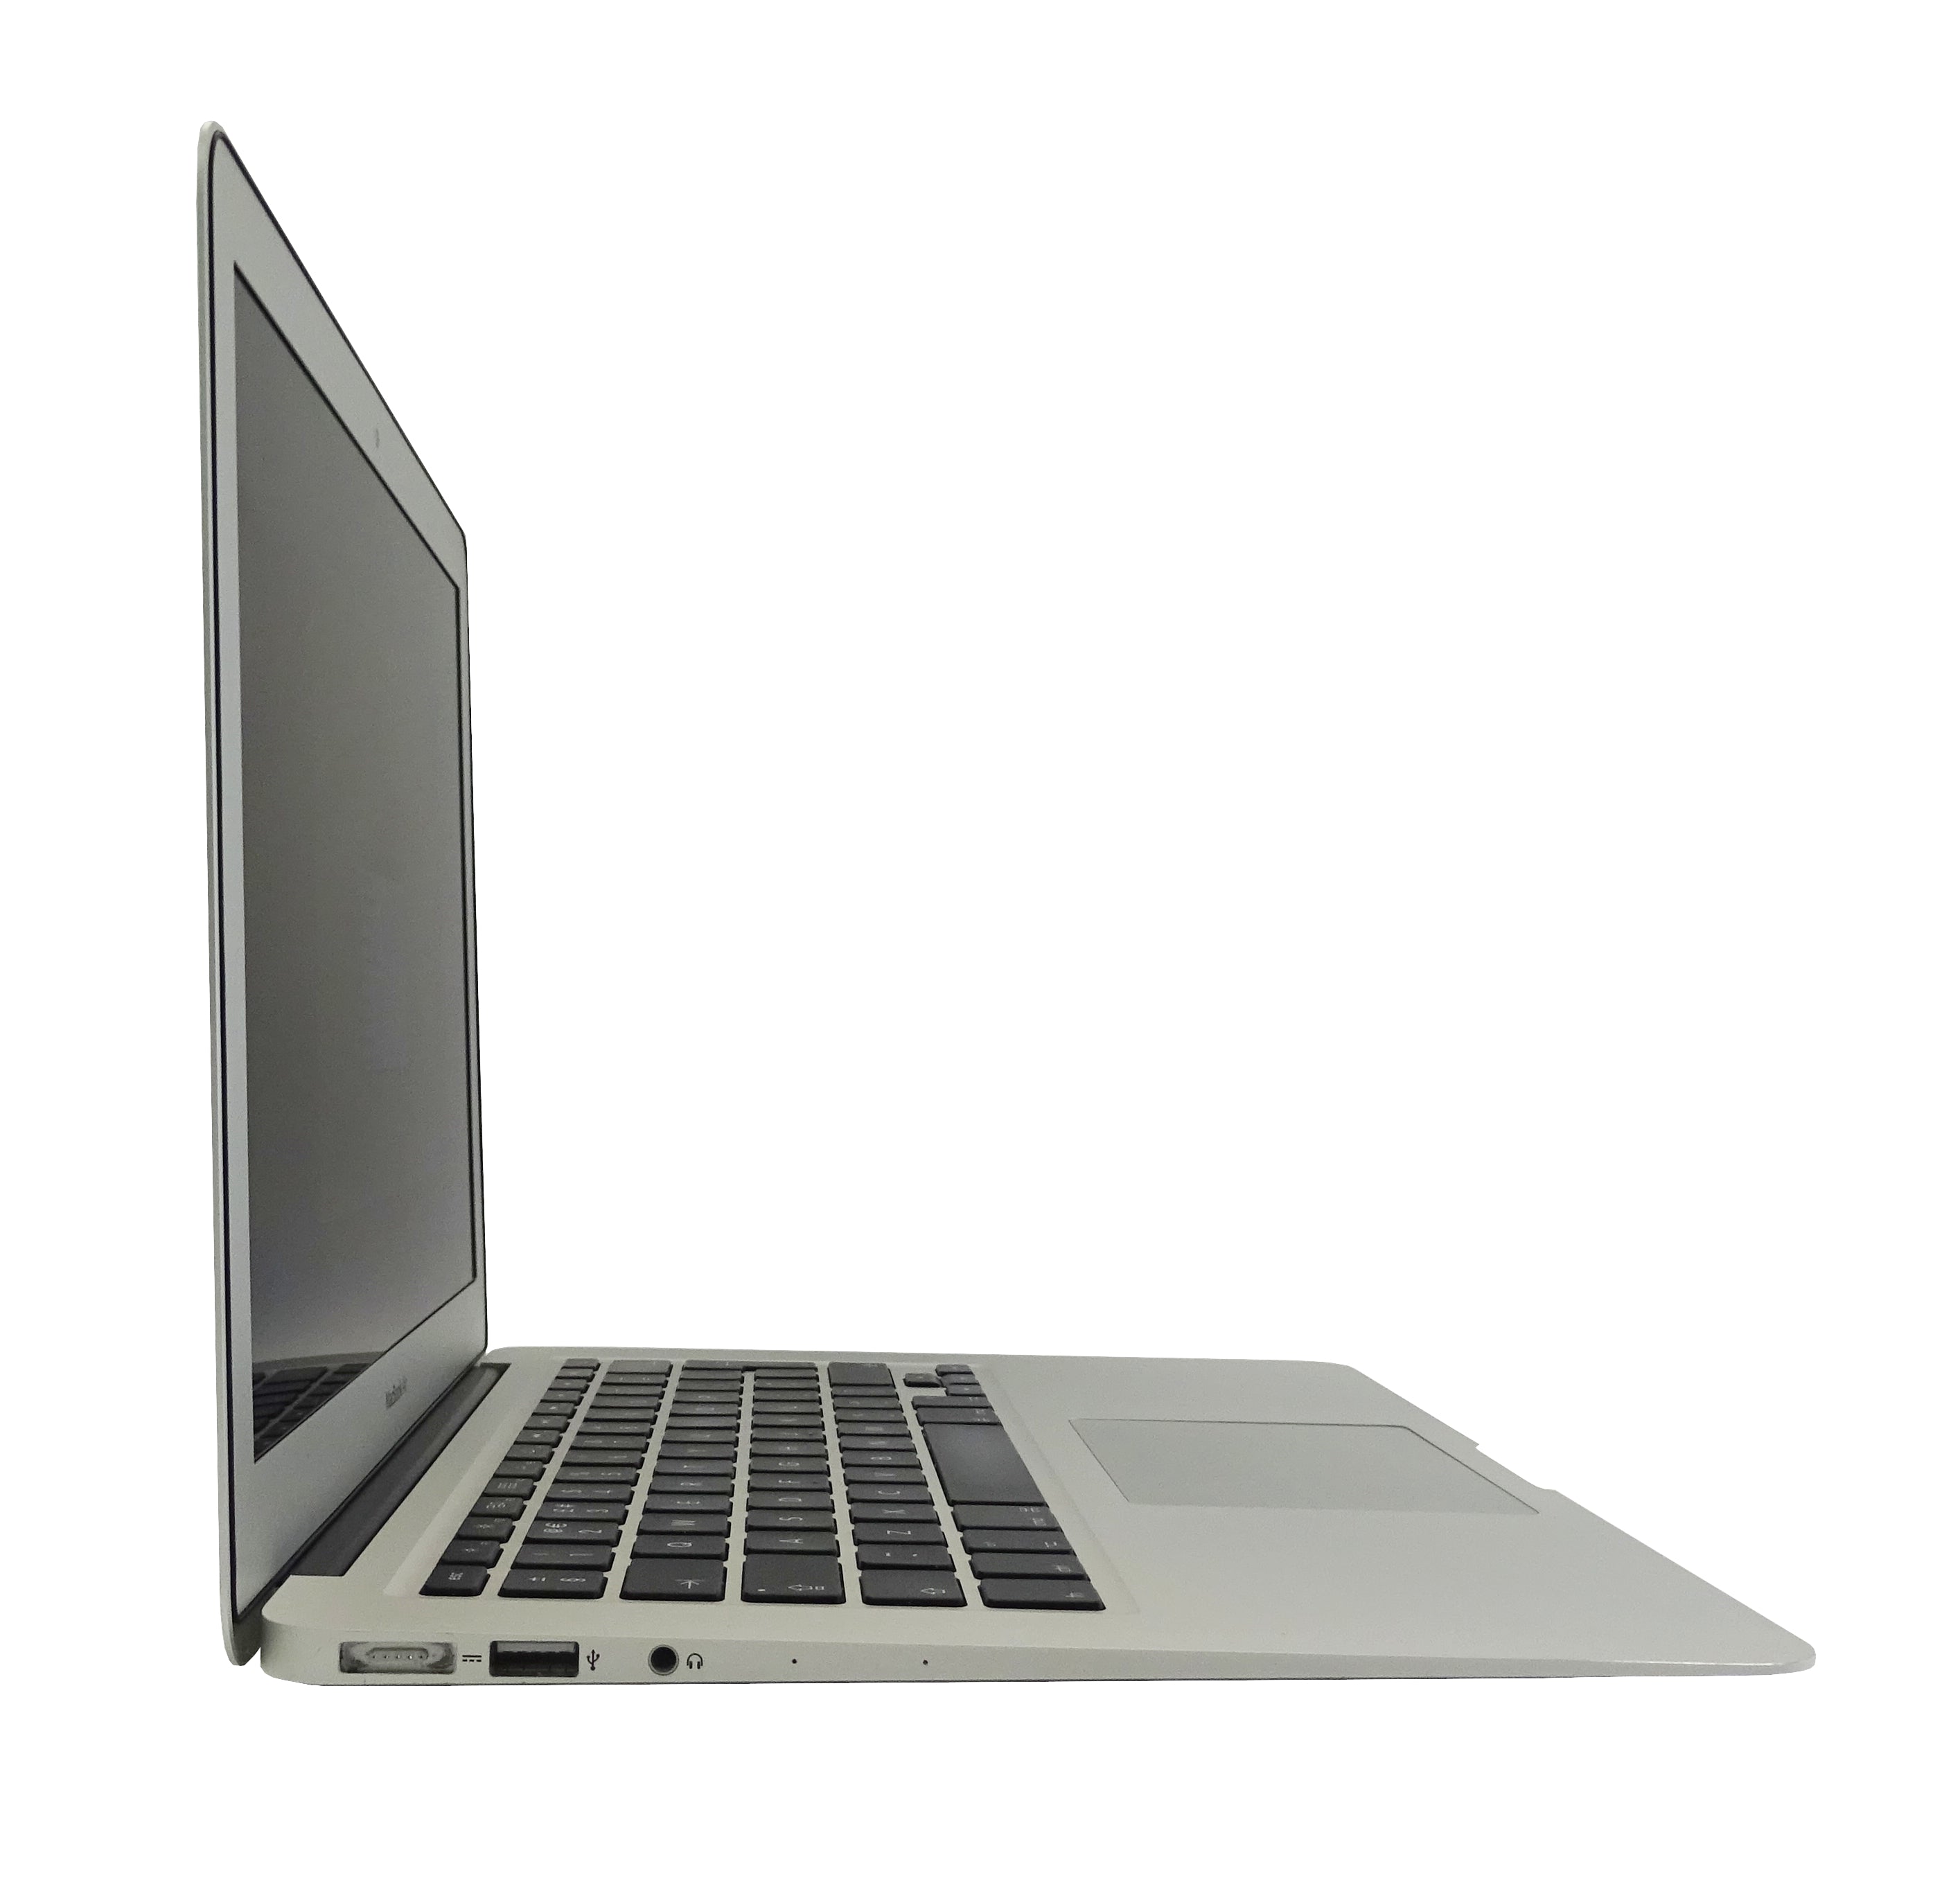 Apple MacBook Air 2015 Laptop, 13.3" Core i5 5th Gen, 4GB RAM, 128GB SSD, A1466